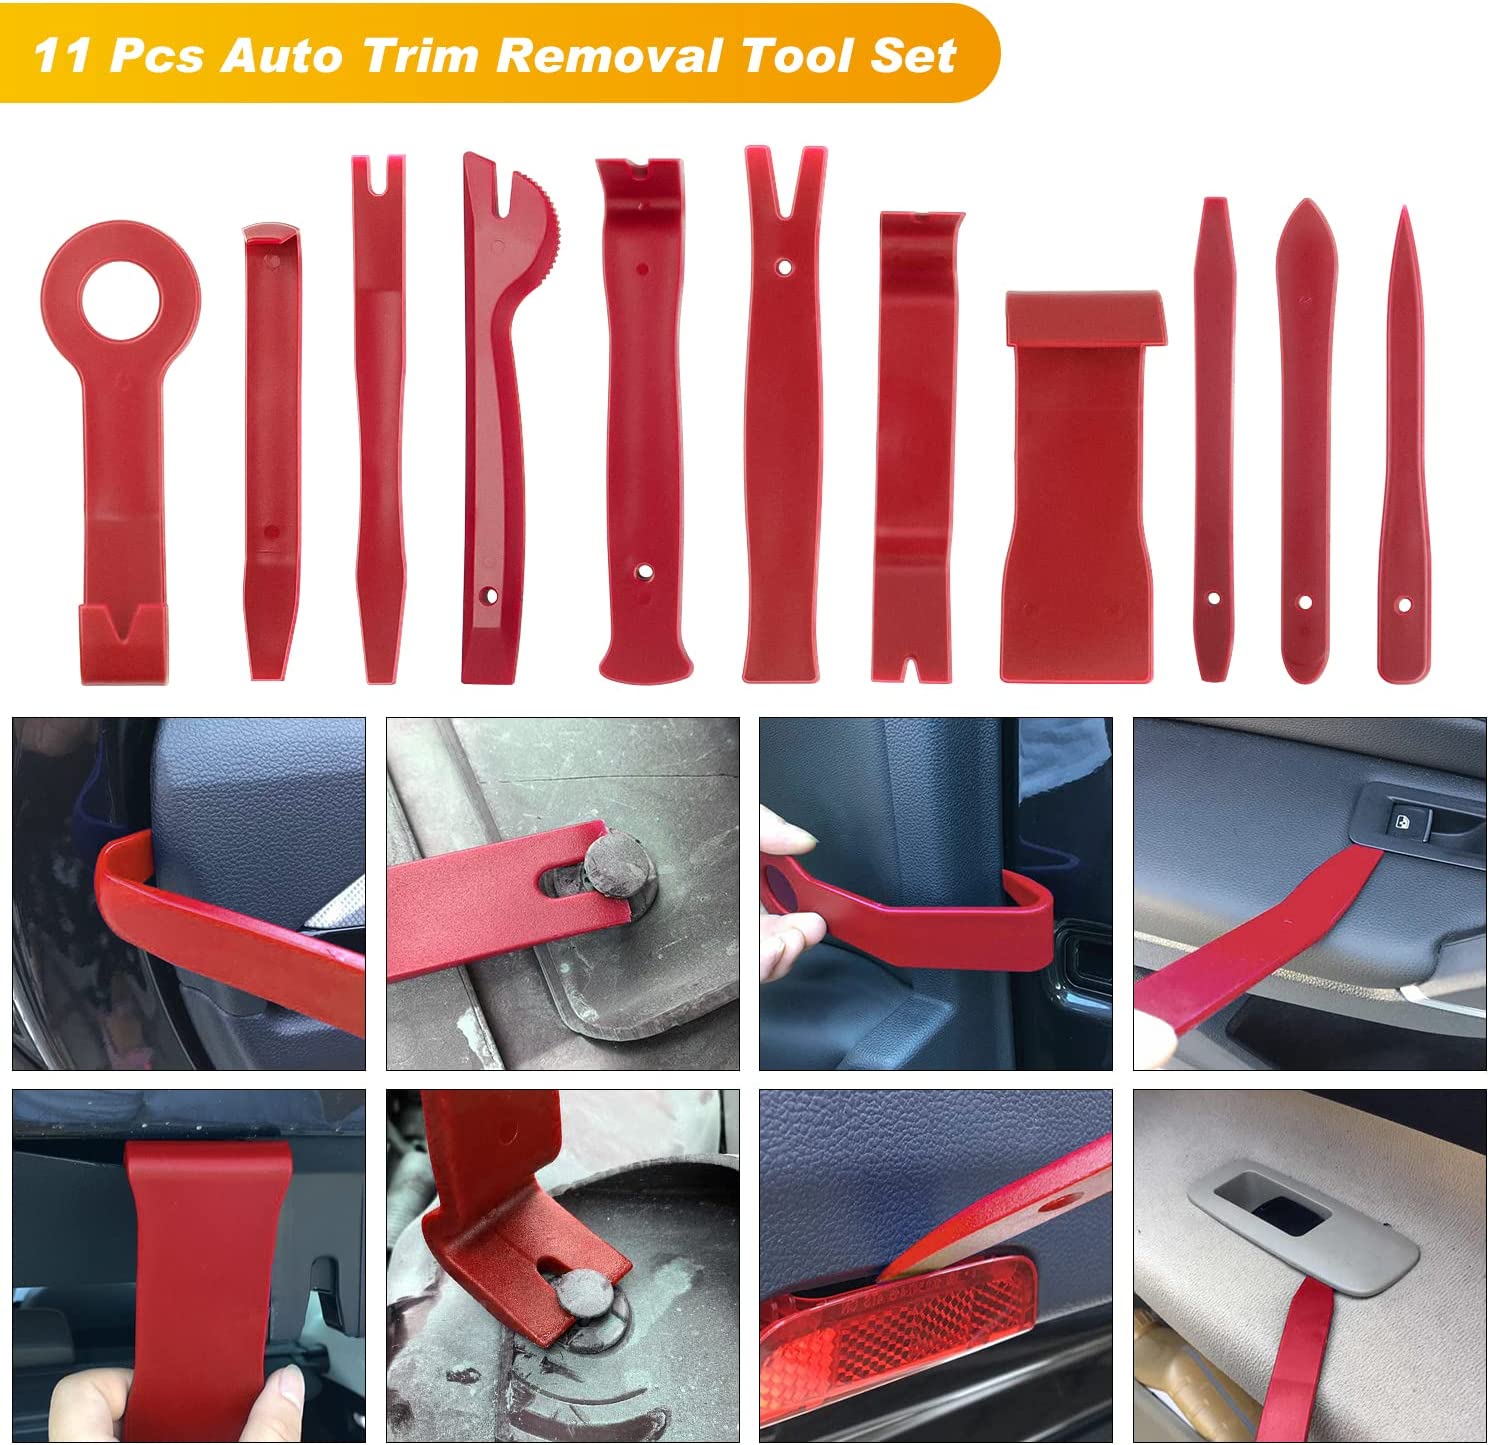 19 Pcs Auto Trim Removal Tool Set Red Nilight